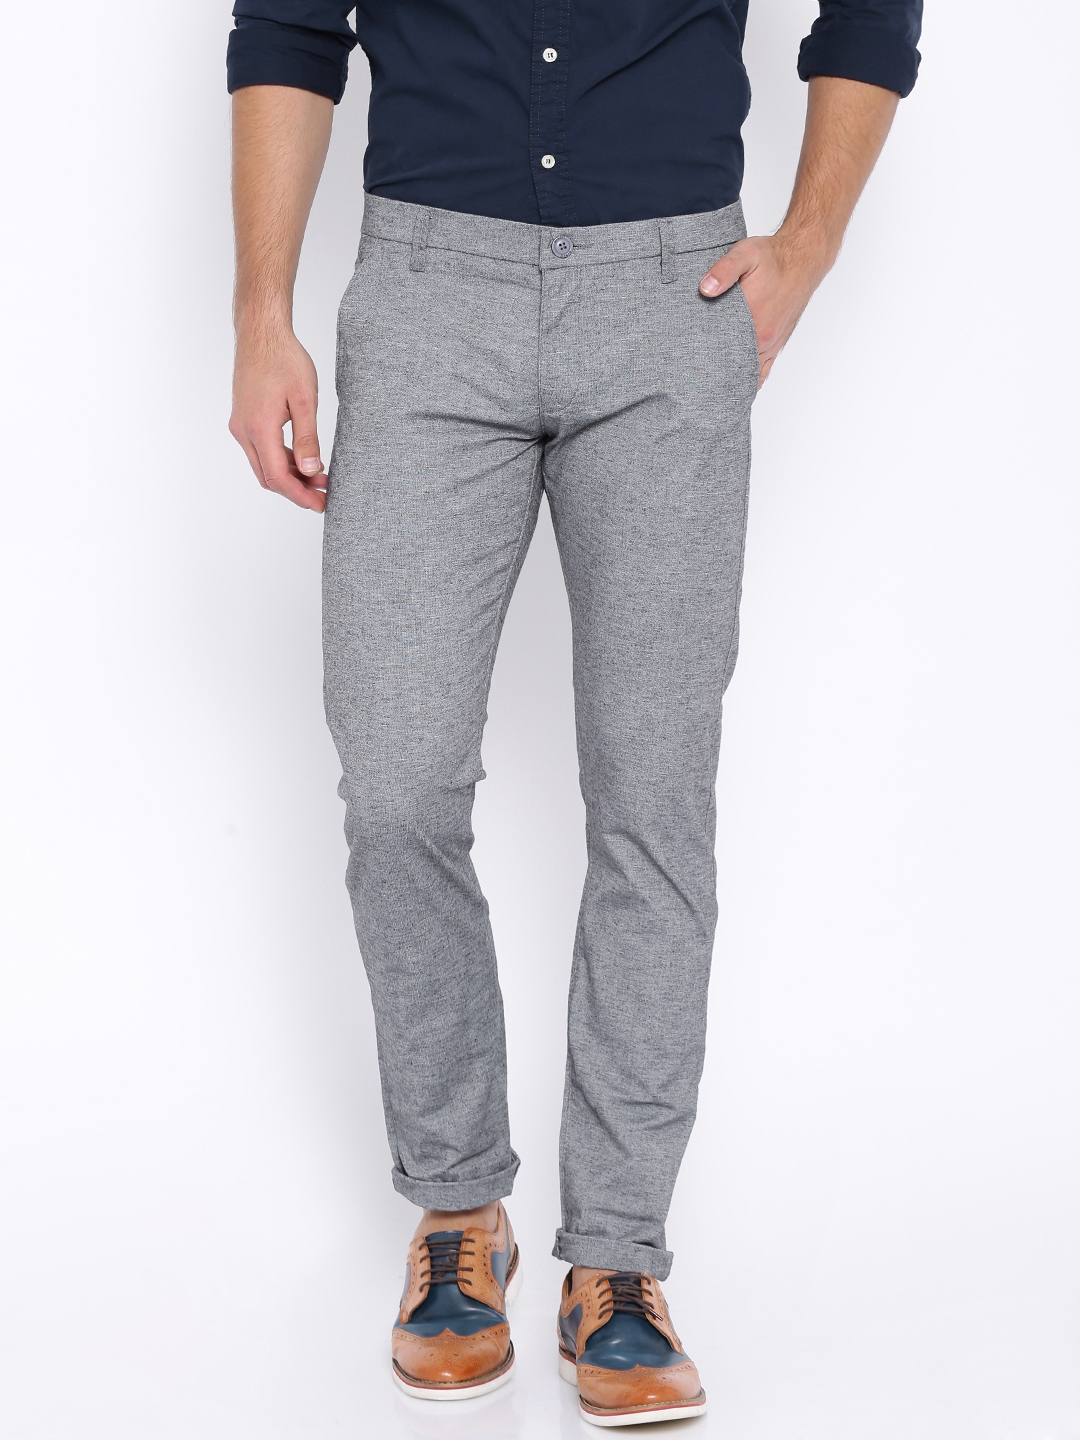 Buy Men Grey Slim Fit Textured Casual Trousers Online  783648  Allen Solly